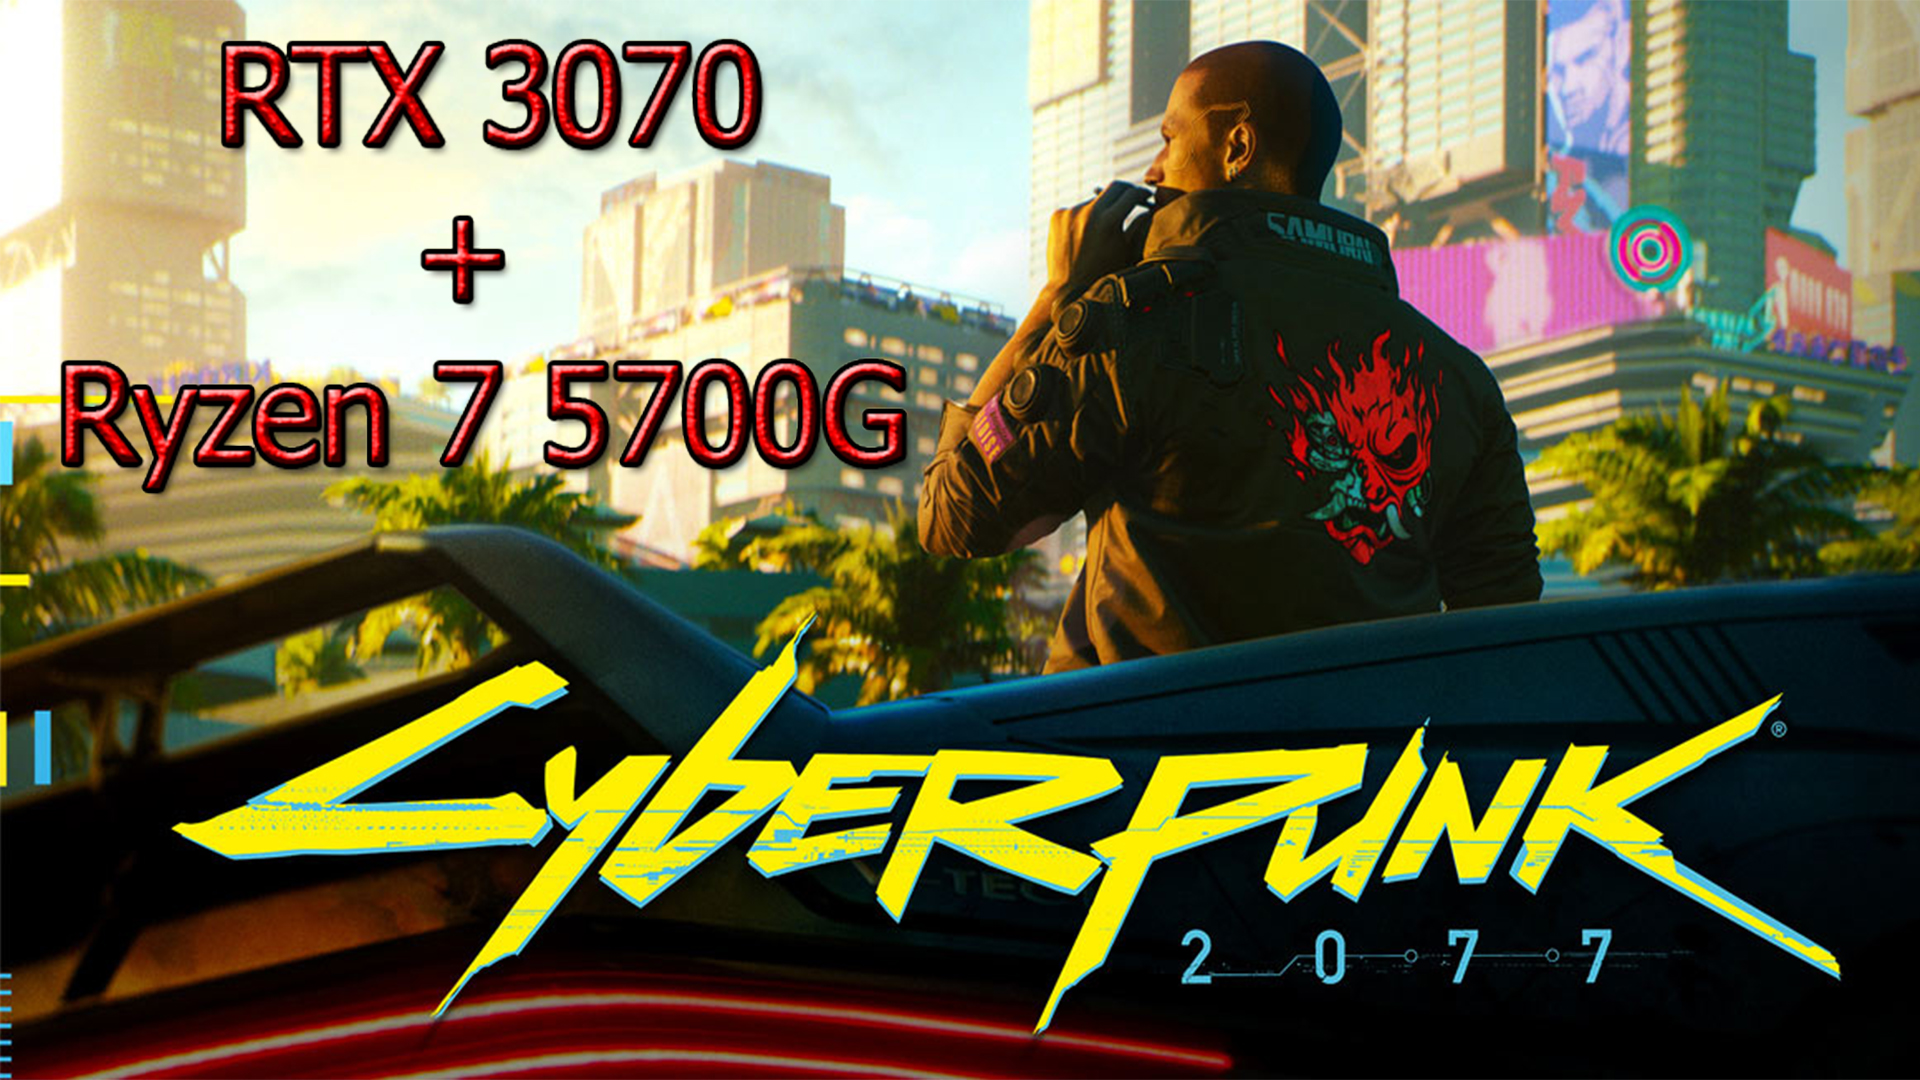 Cyberpunk 2077 RTX 3070+Ryzen 7 5700G